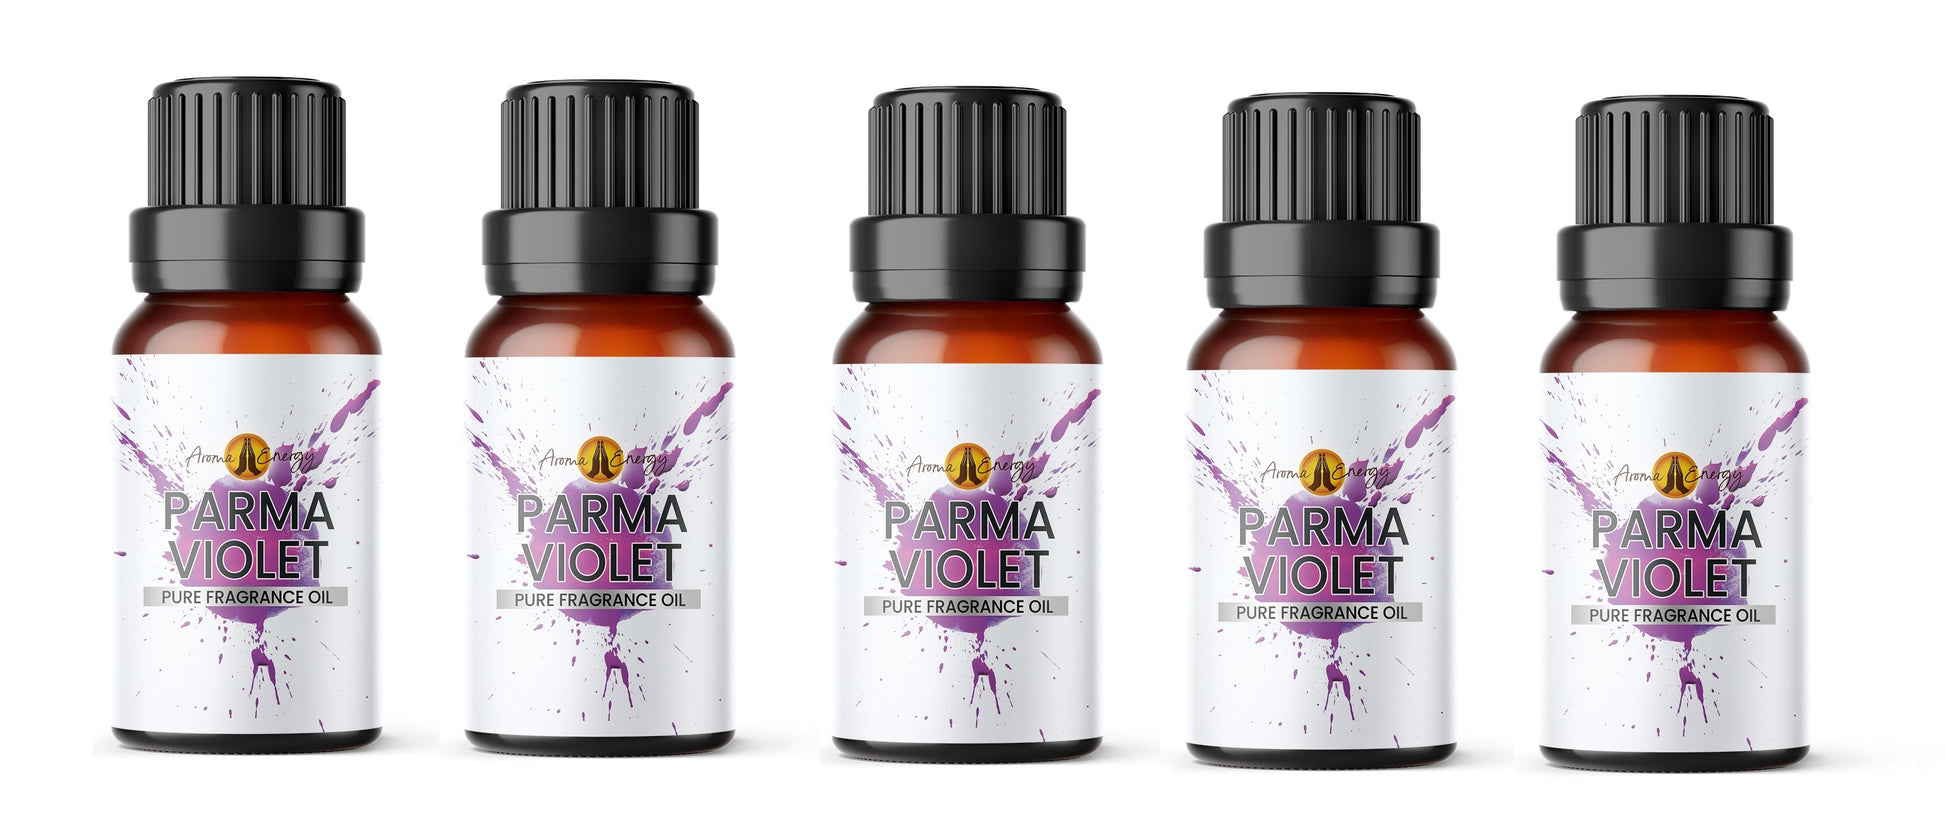 Parma Violet Fragrance Oil - Aroma Energy